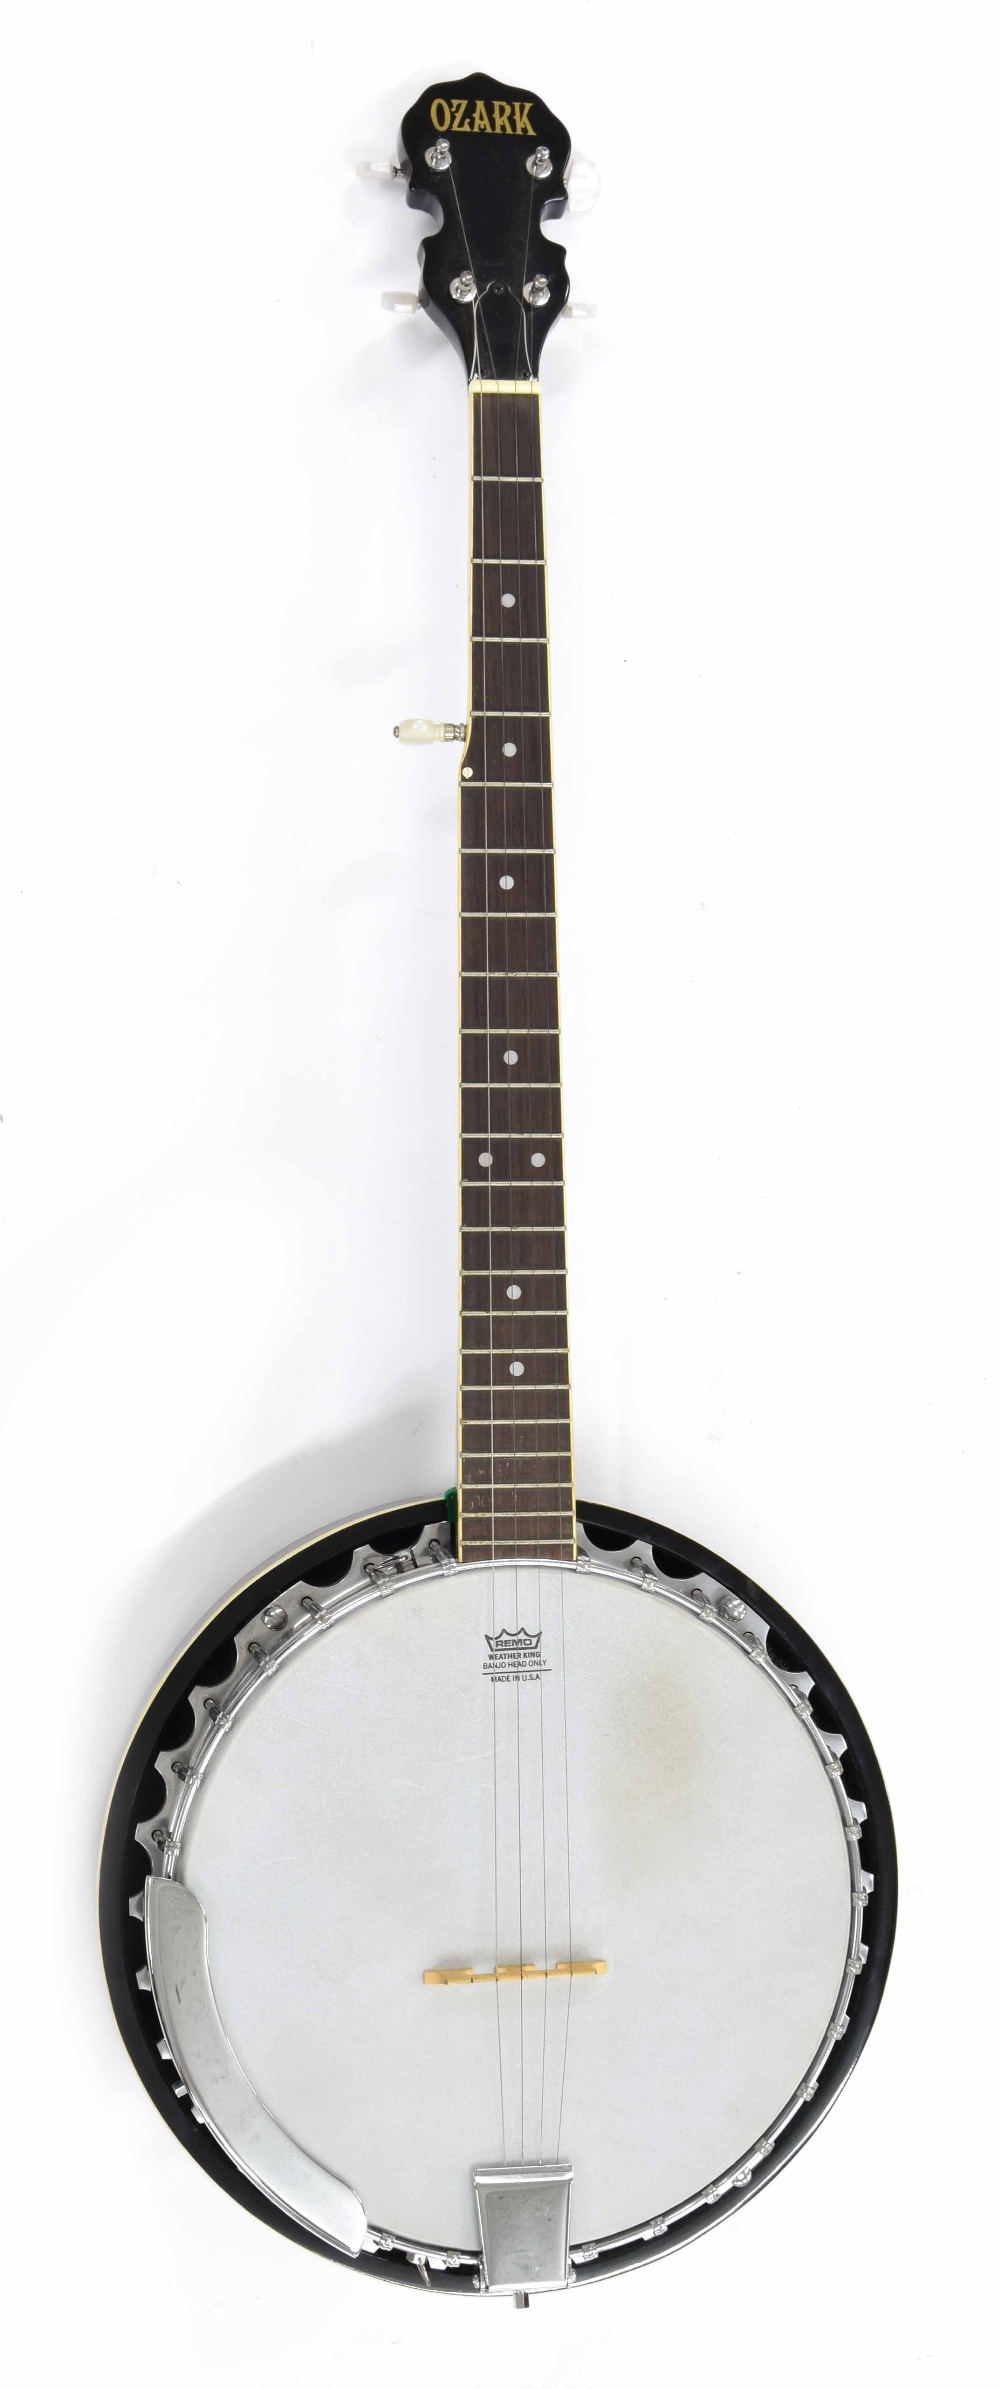 Ozark five string banjo, soft bag